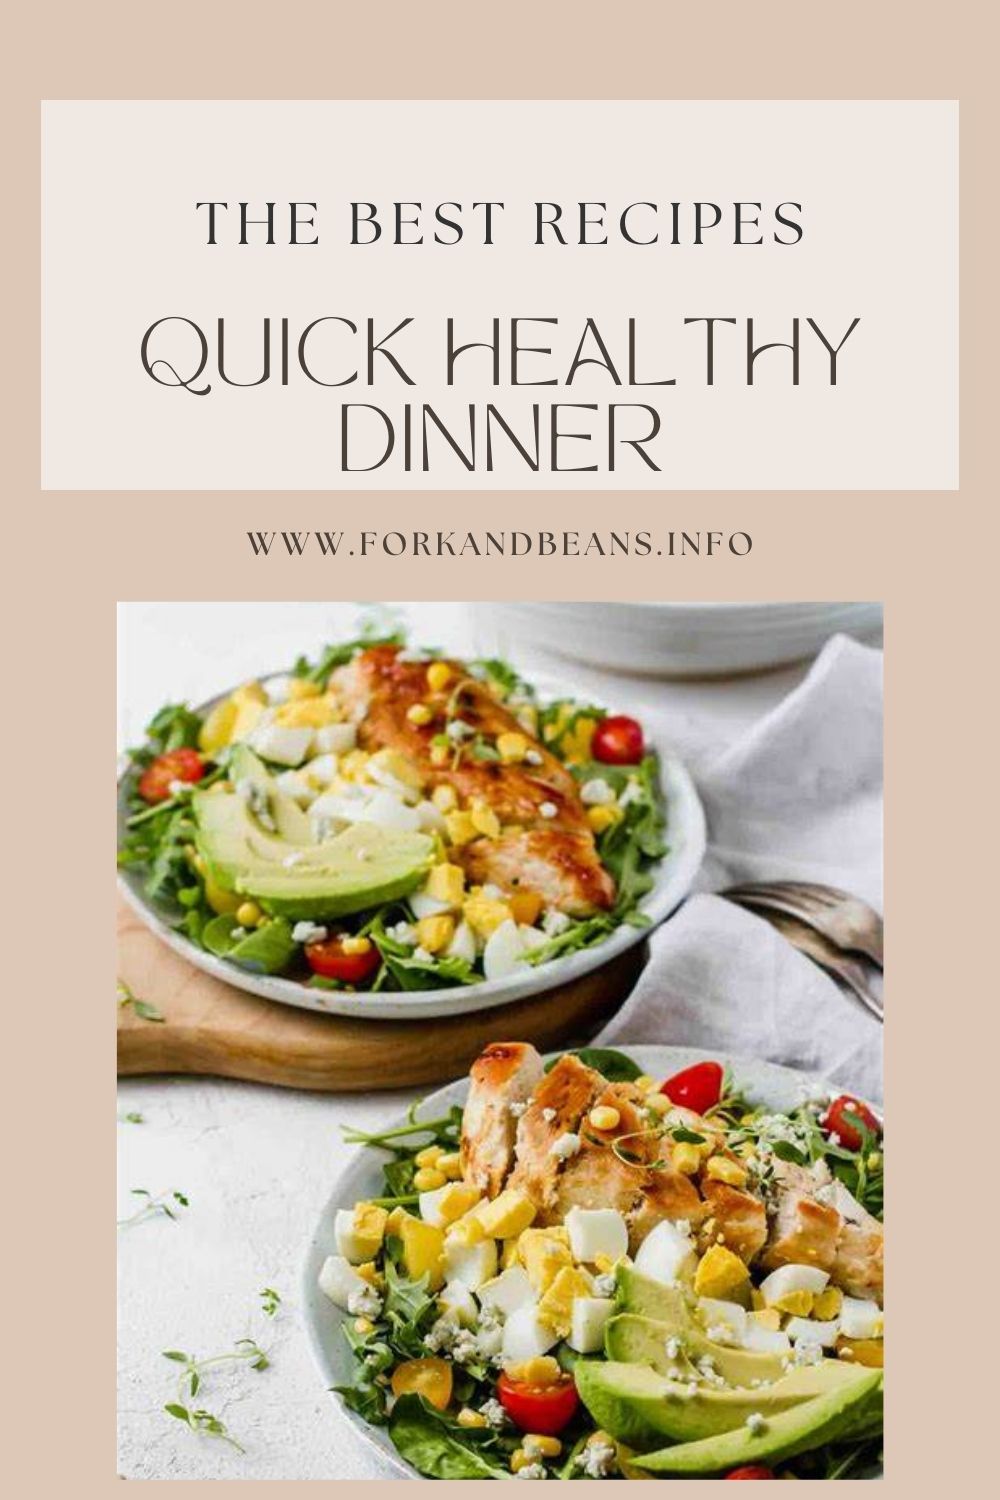 Recipe for a Healthy Chicken Cobb Salad